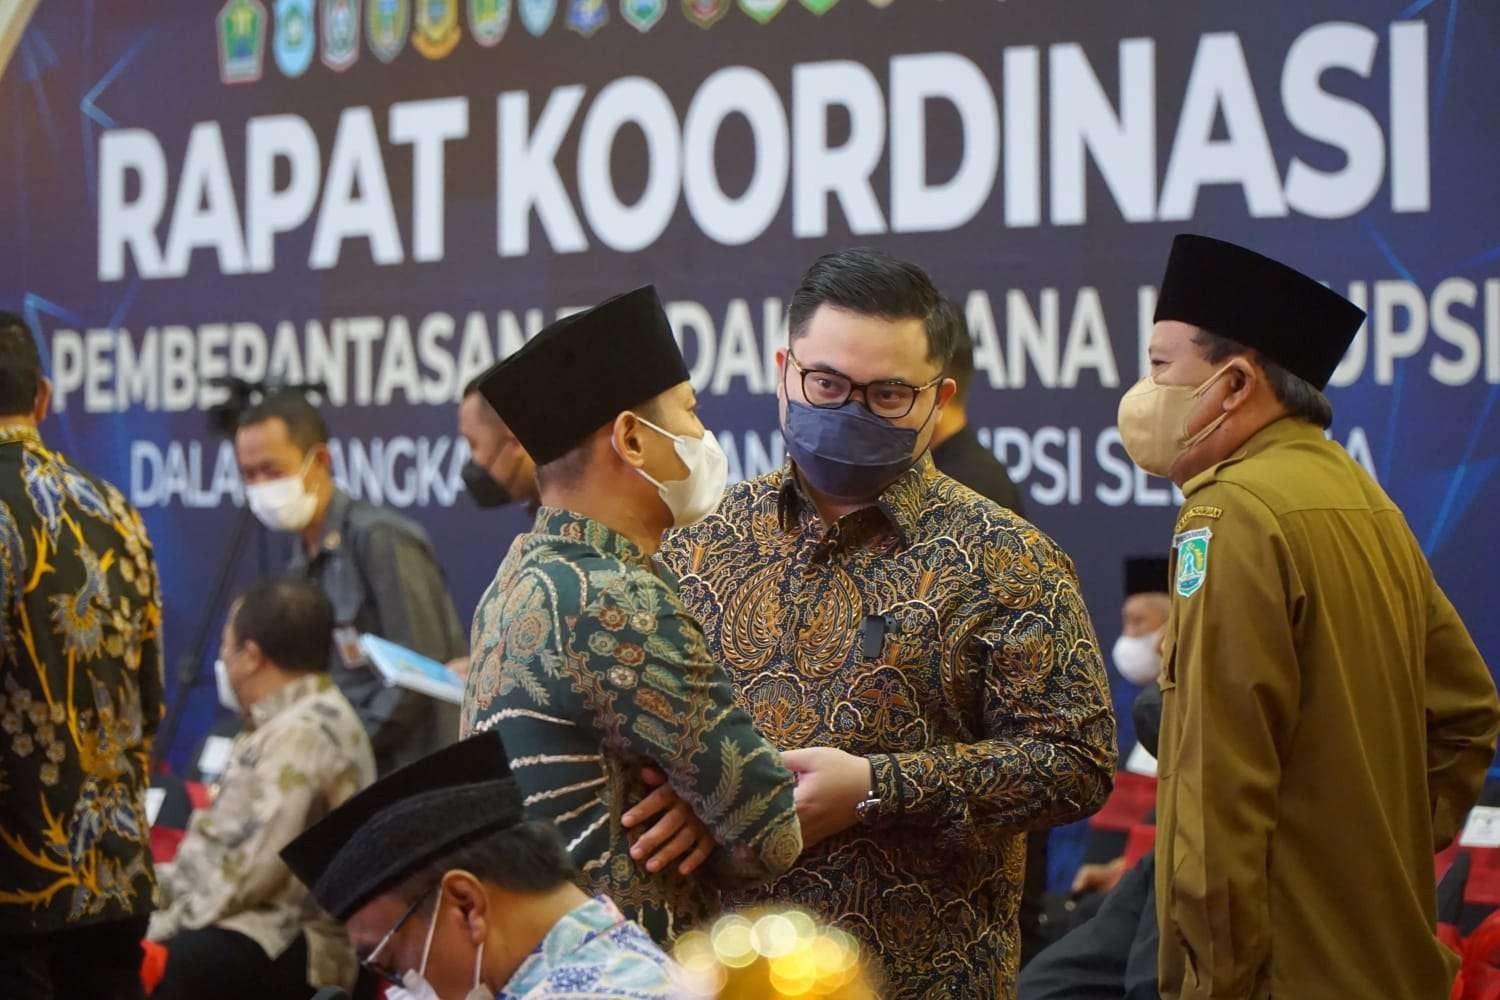 Bupati Kediri Hanindhito hadiri rapat koordinasi pemberantasan tindak pidana korupsi bersama Kepala daerah se-Jawa Timur (Foto: istimewa)